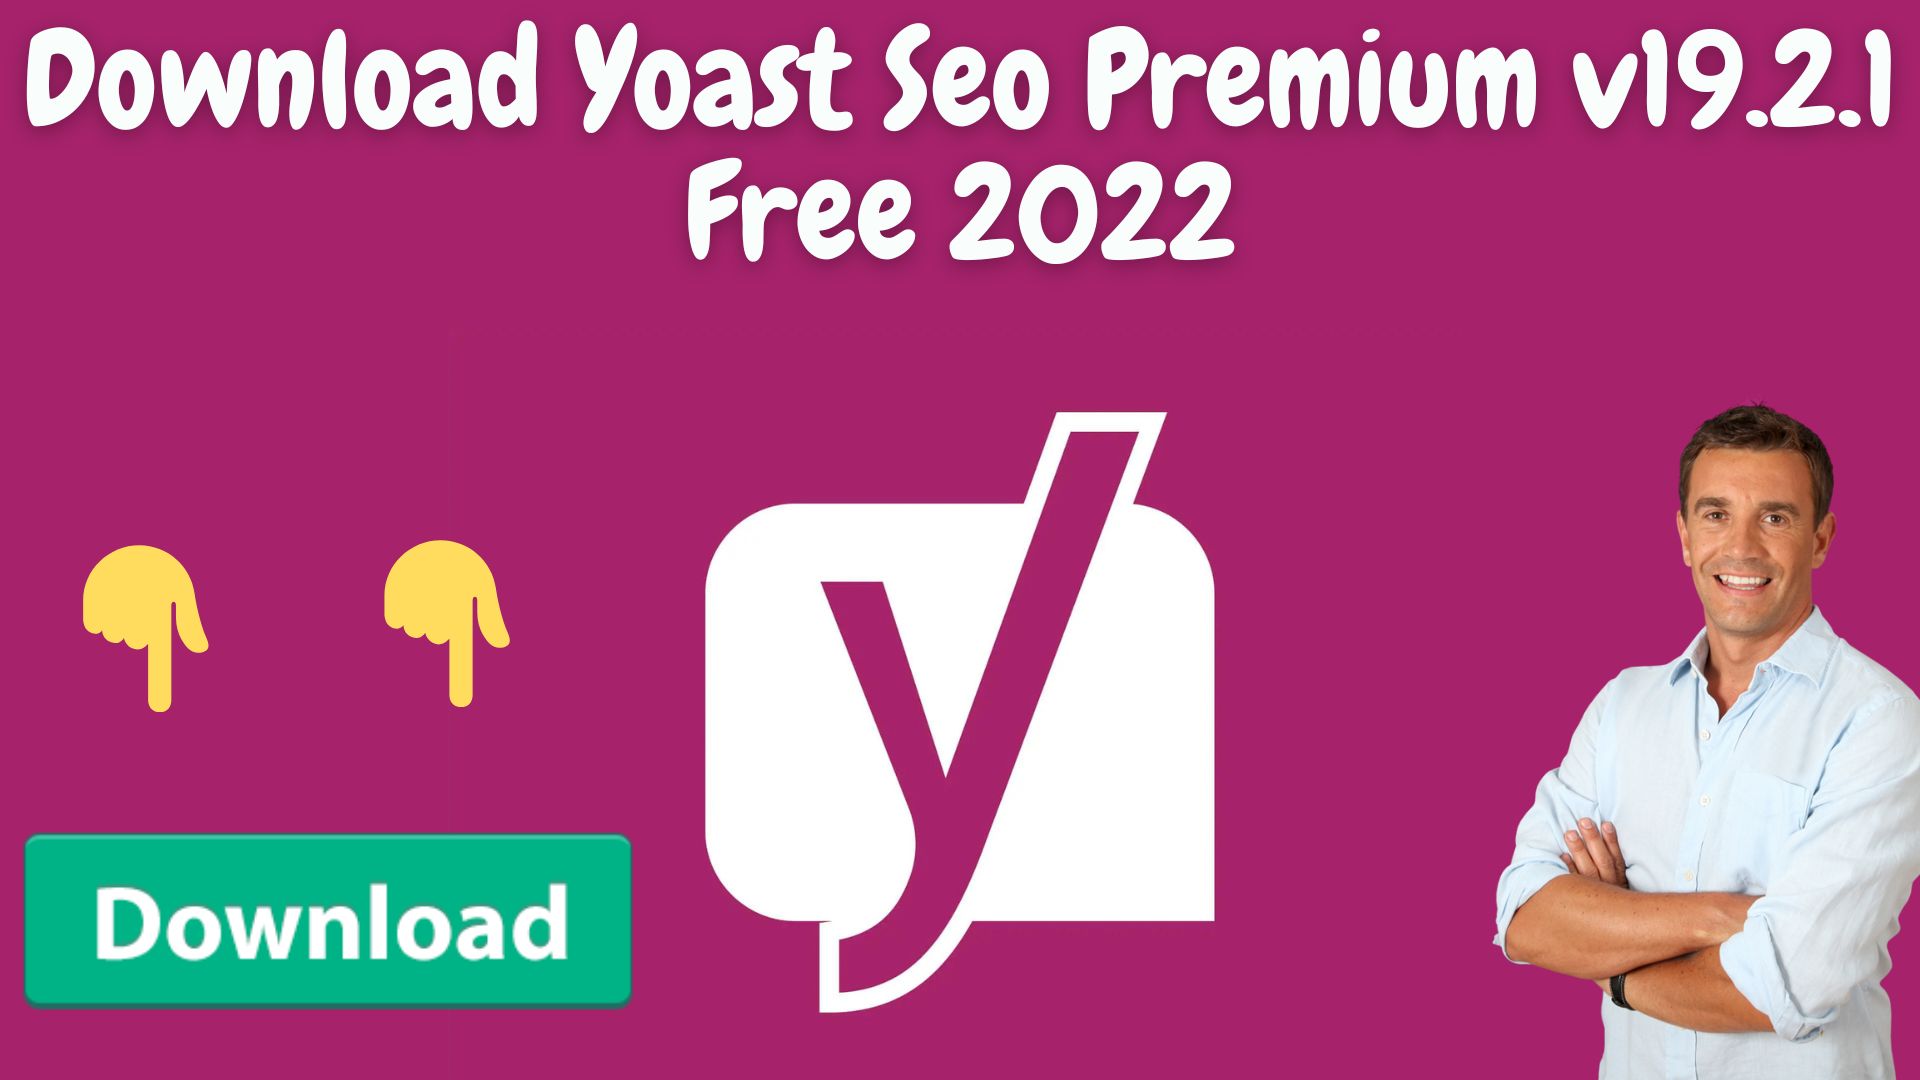 Download yoast seo premium v19. 2. 1 free 2022